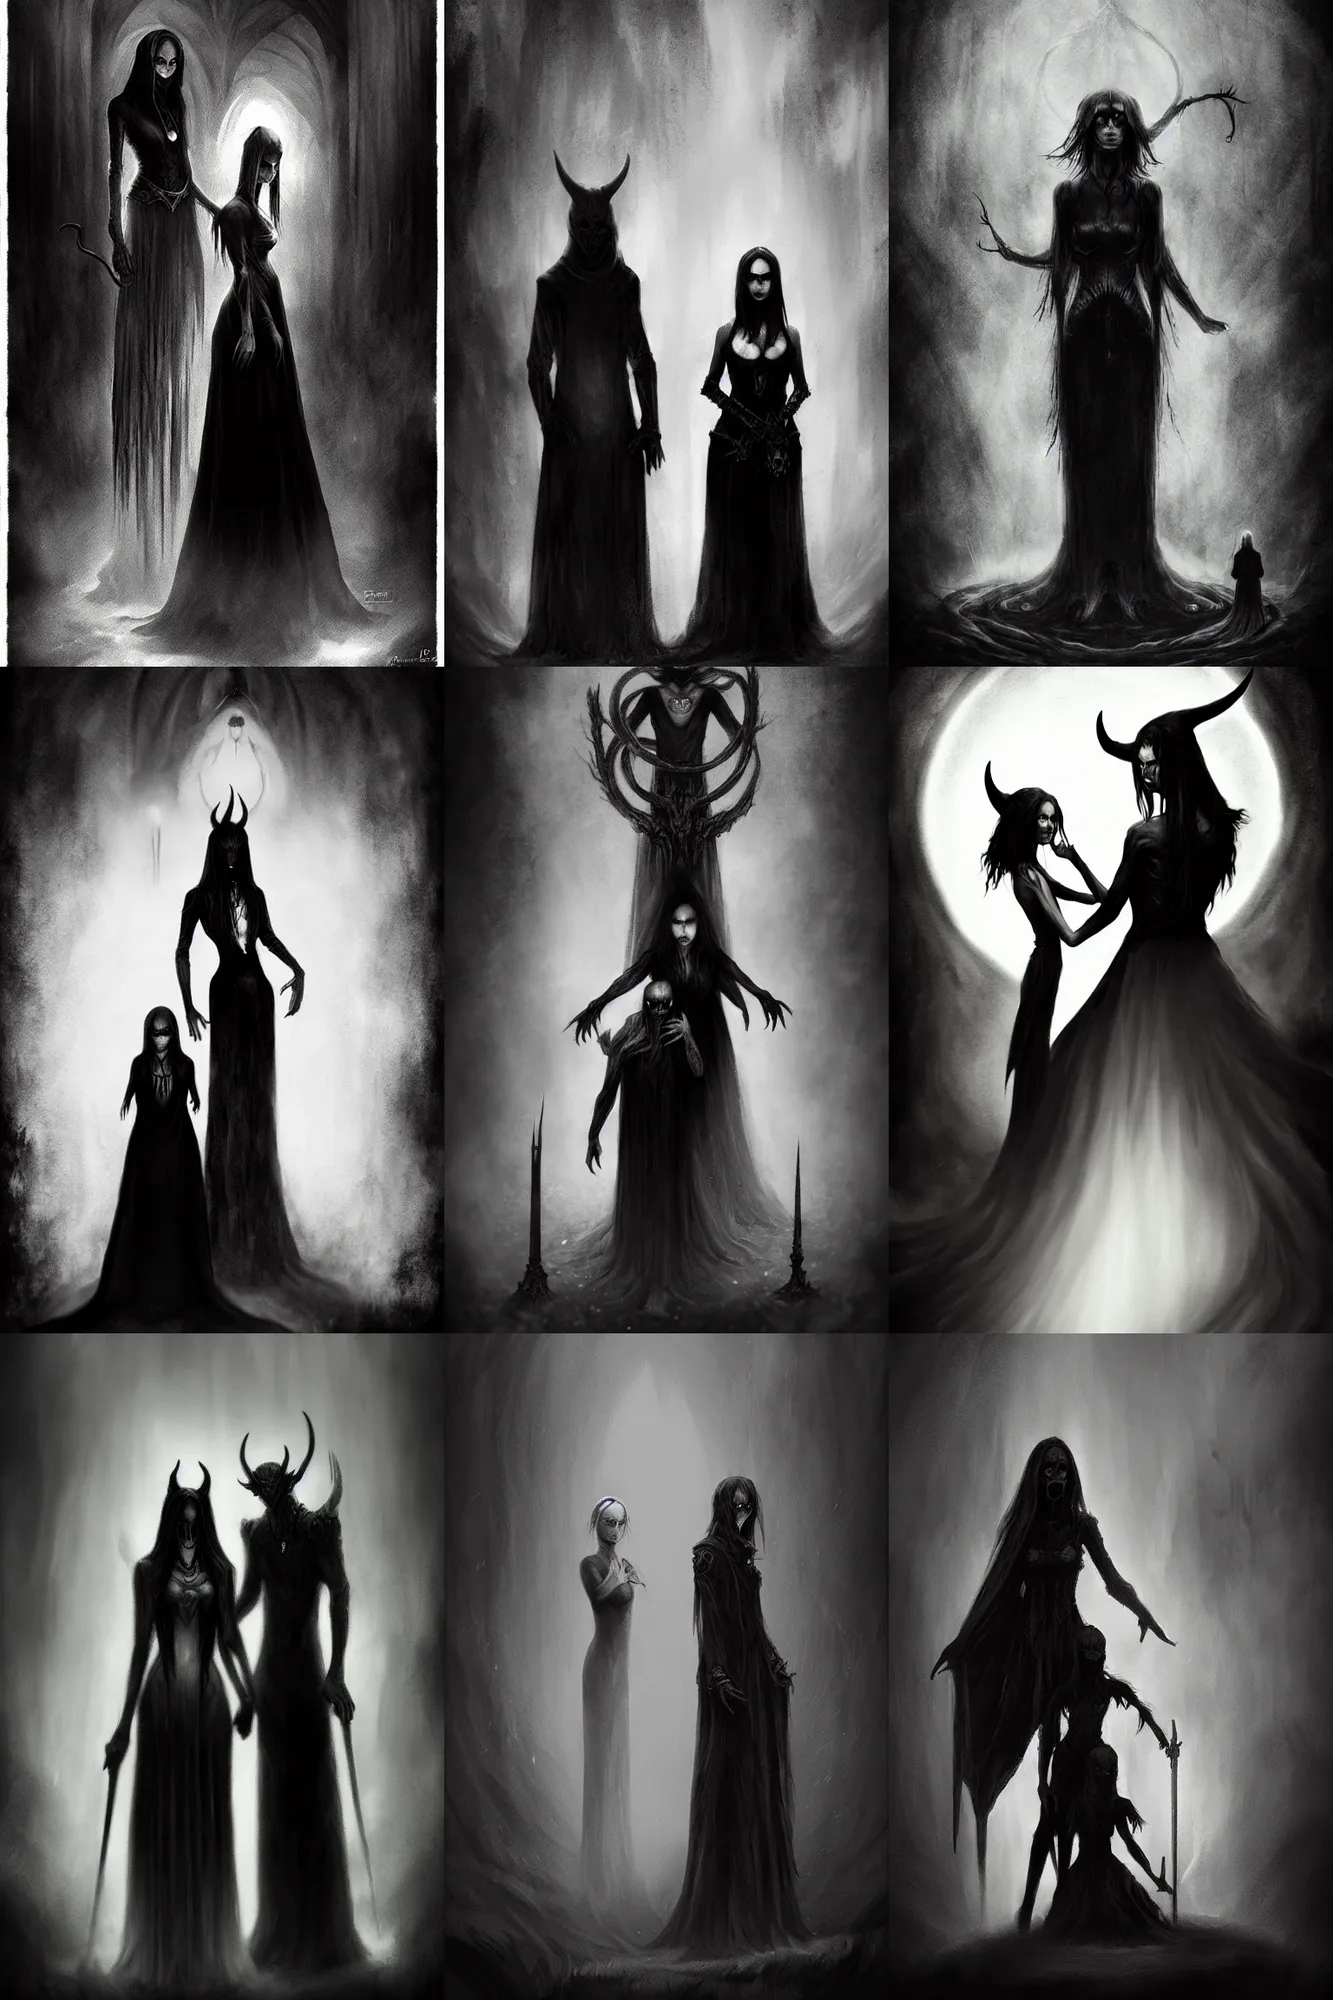 Prompt: a black and white photo of a demon standing behind a woman, concept art by Þórarinn B. Þorláksson and Anato Finnstark, deviantart, gothic art, hellish, wiccan, macabre, demonic photograph